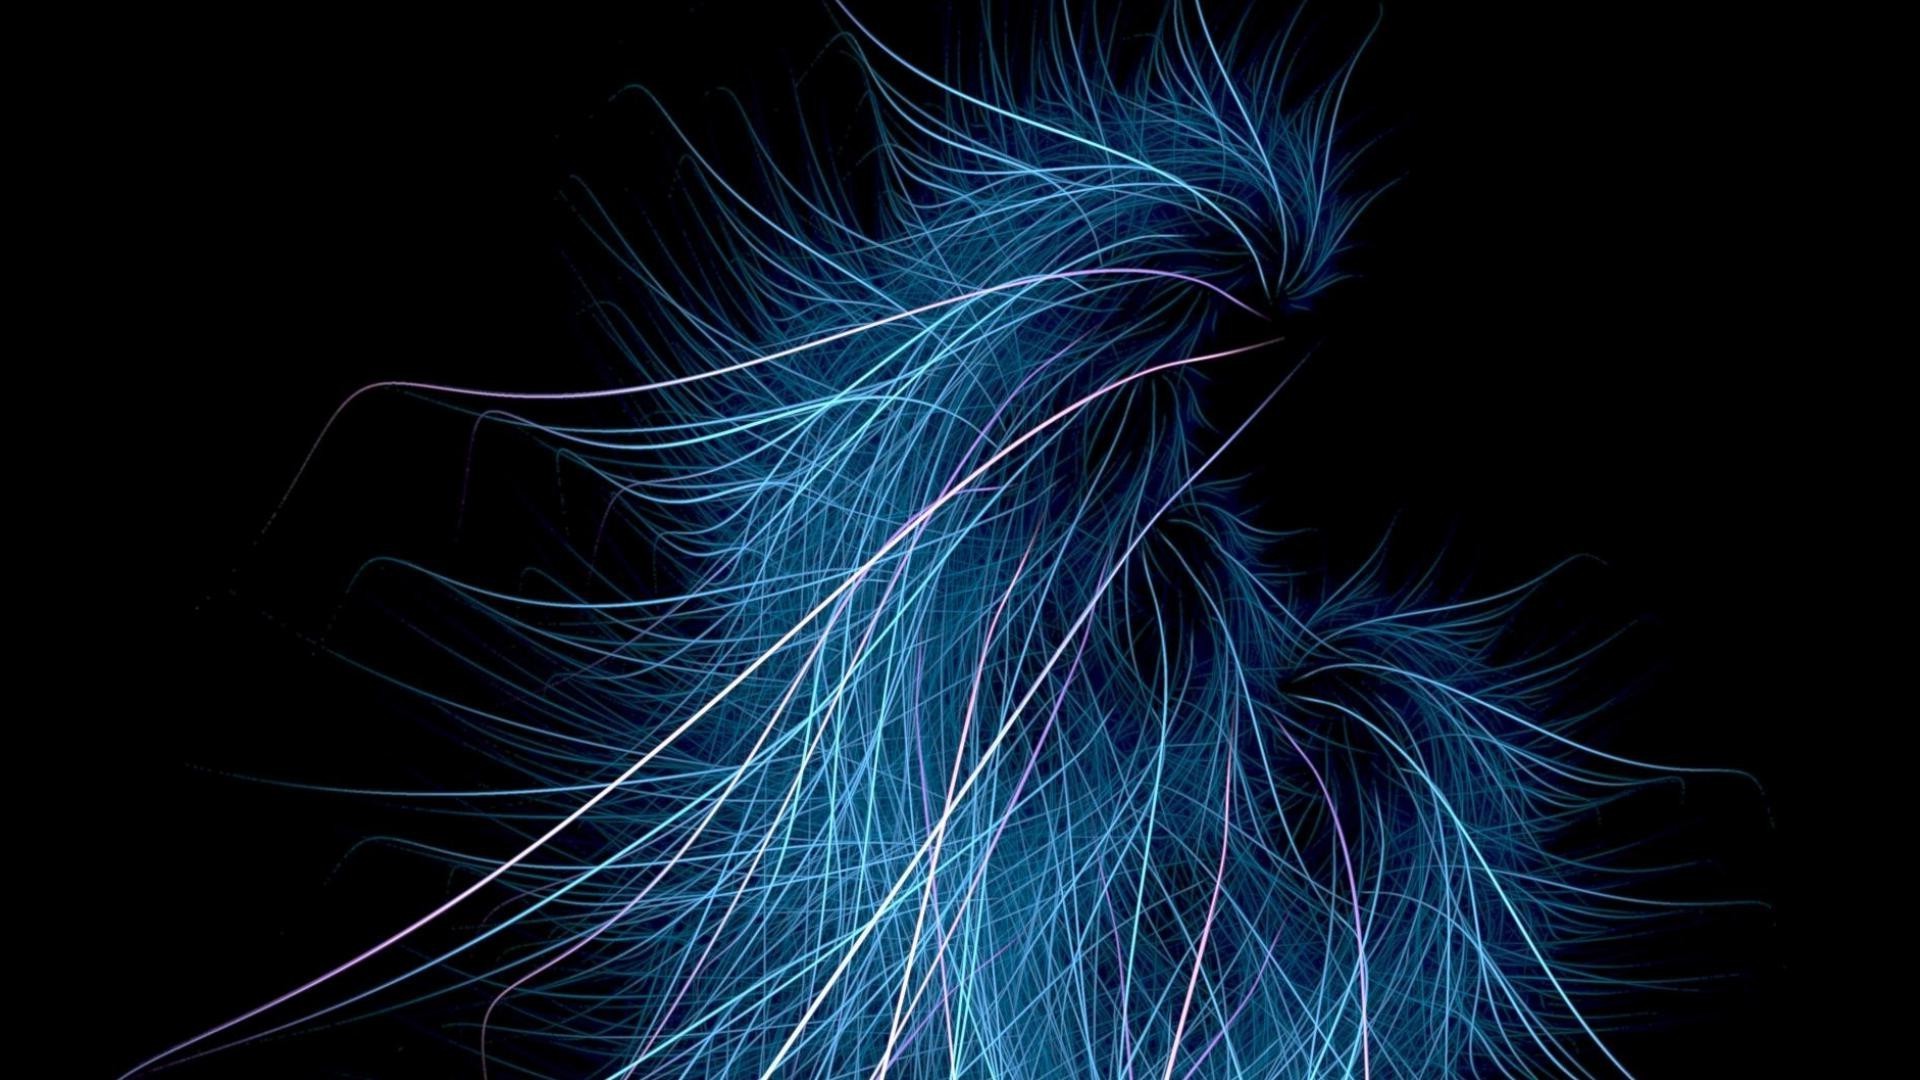 bright colors flame fireworks abstract light wave color dark art desktop energy fractal bright graphic flash dynamic curve fantasy surreal